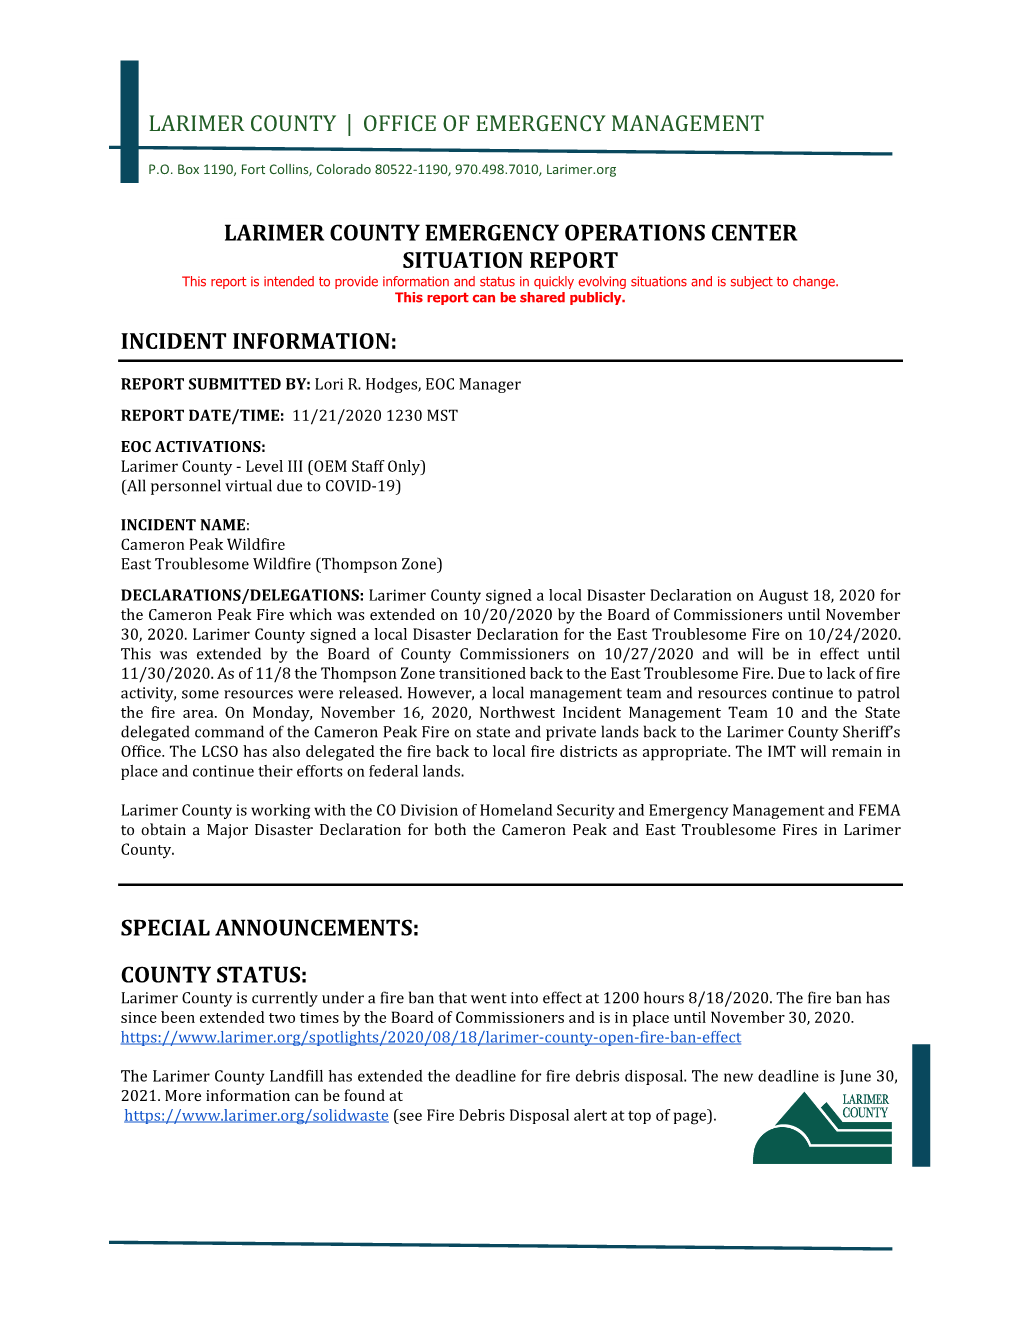 Larimer County Emergency Operation Center